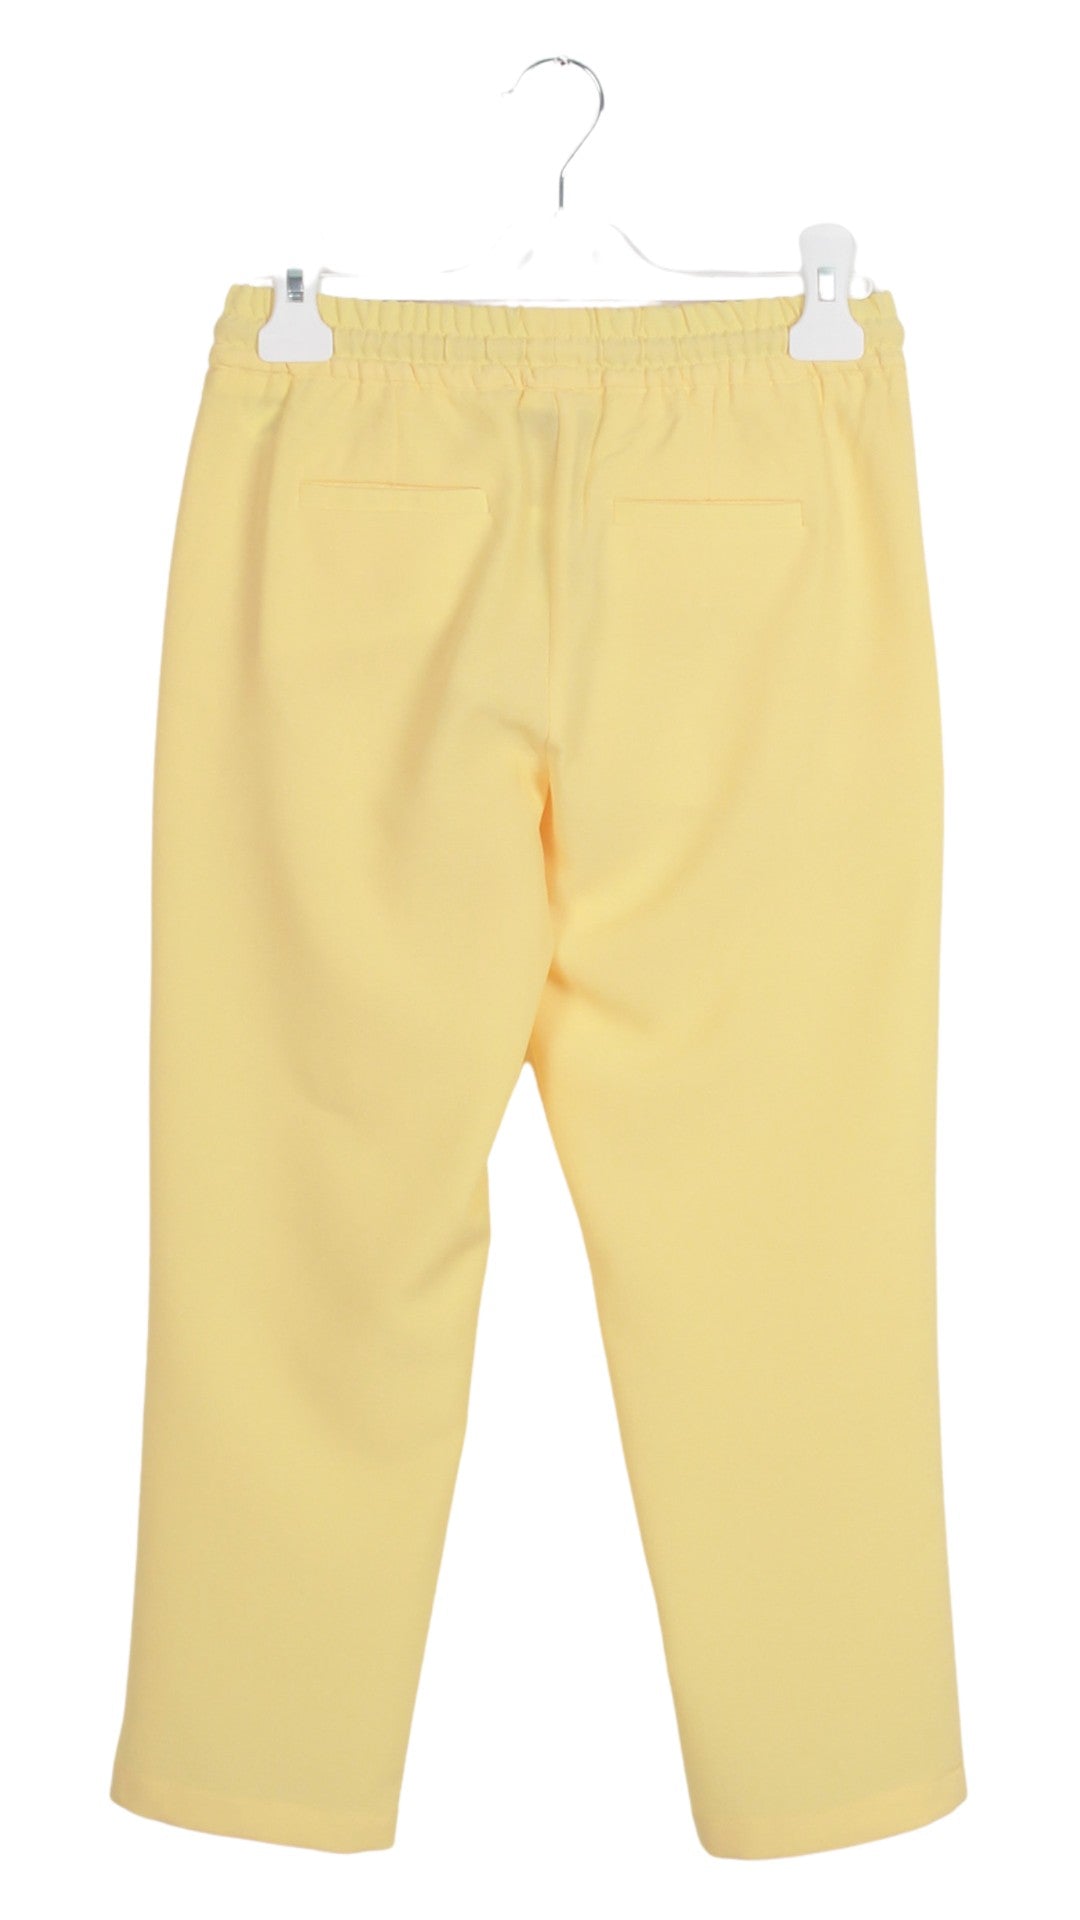 InCity Boys Toddler Tween 1-14 Years Yellow Mid-Rise Comfy Solid Garway Pants InCity Boys Girls